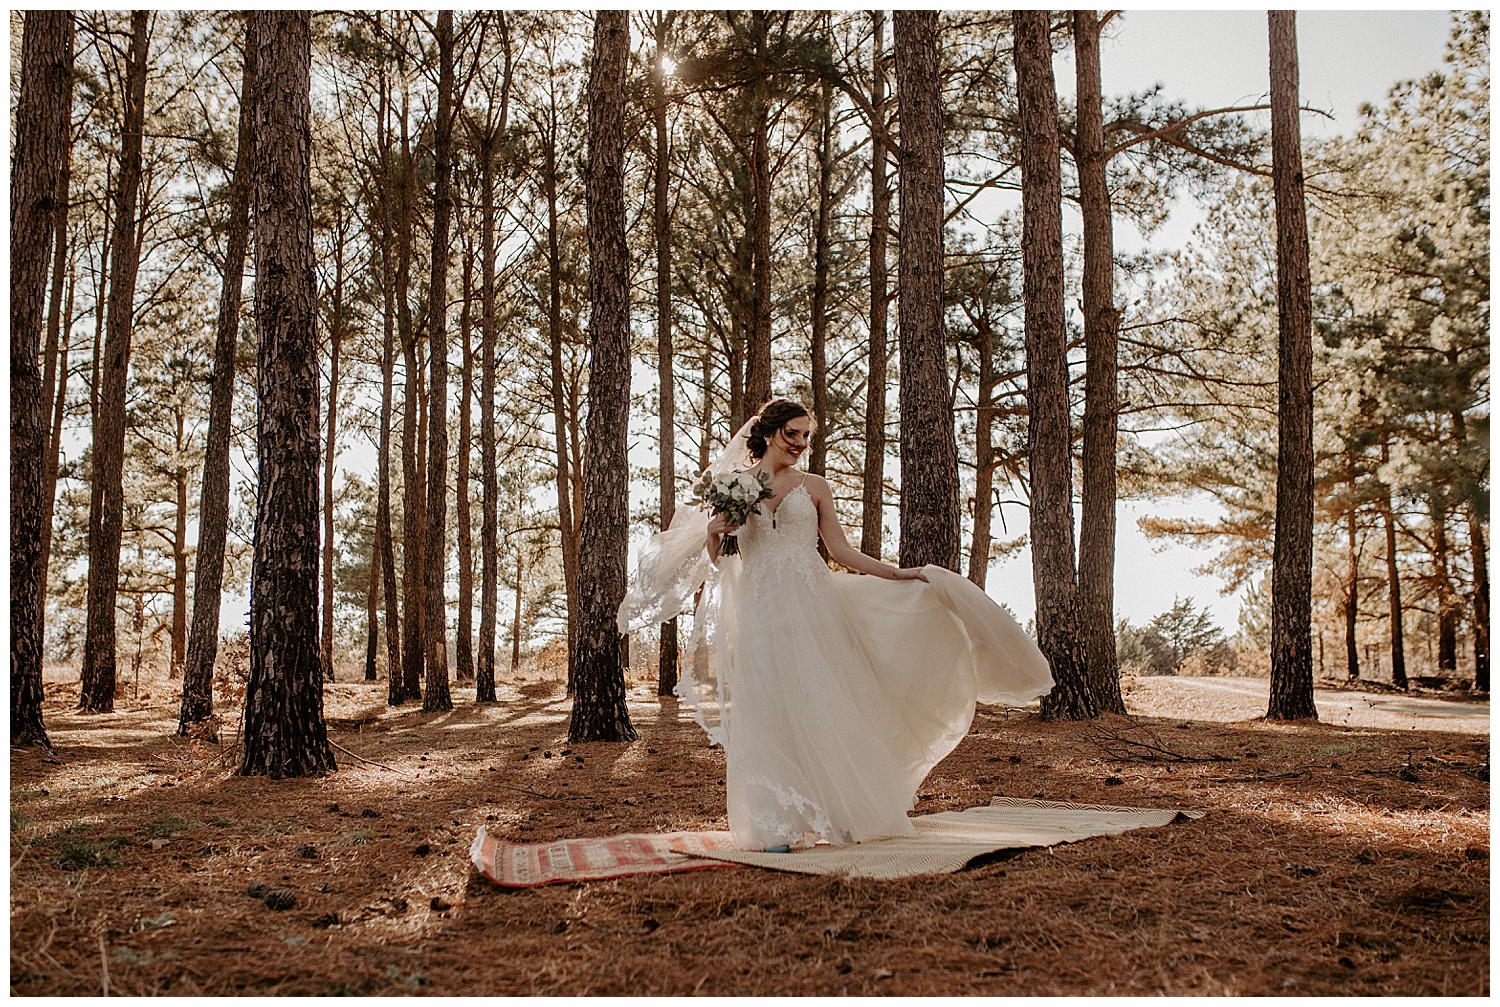 Laken-Mackenzie-Photography-Cheyenne-Bridal-Session-Dallas-Fort-Worth-Wedding-Photographer16.jpg